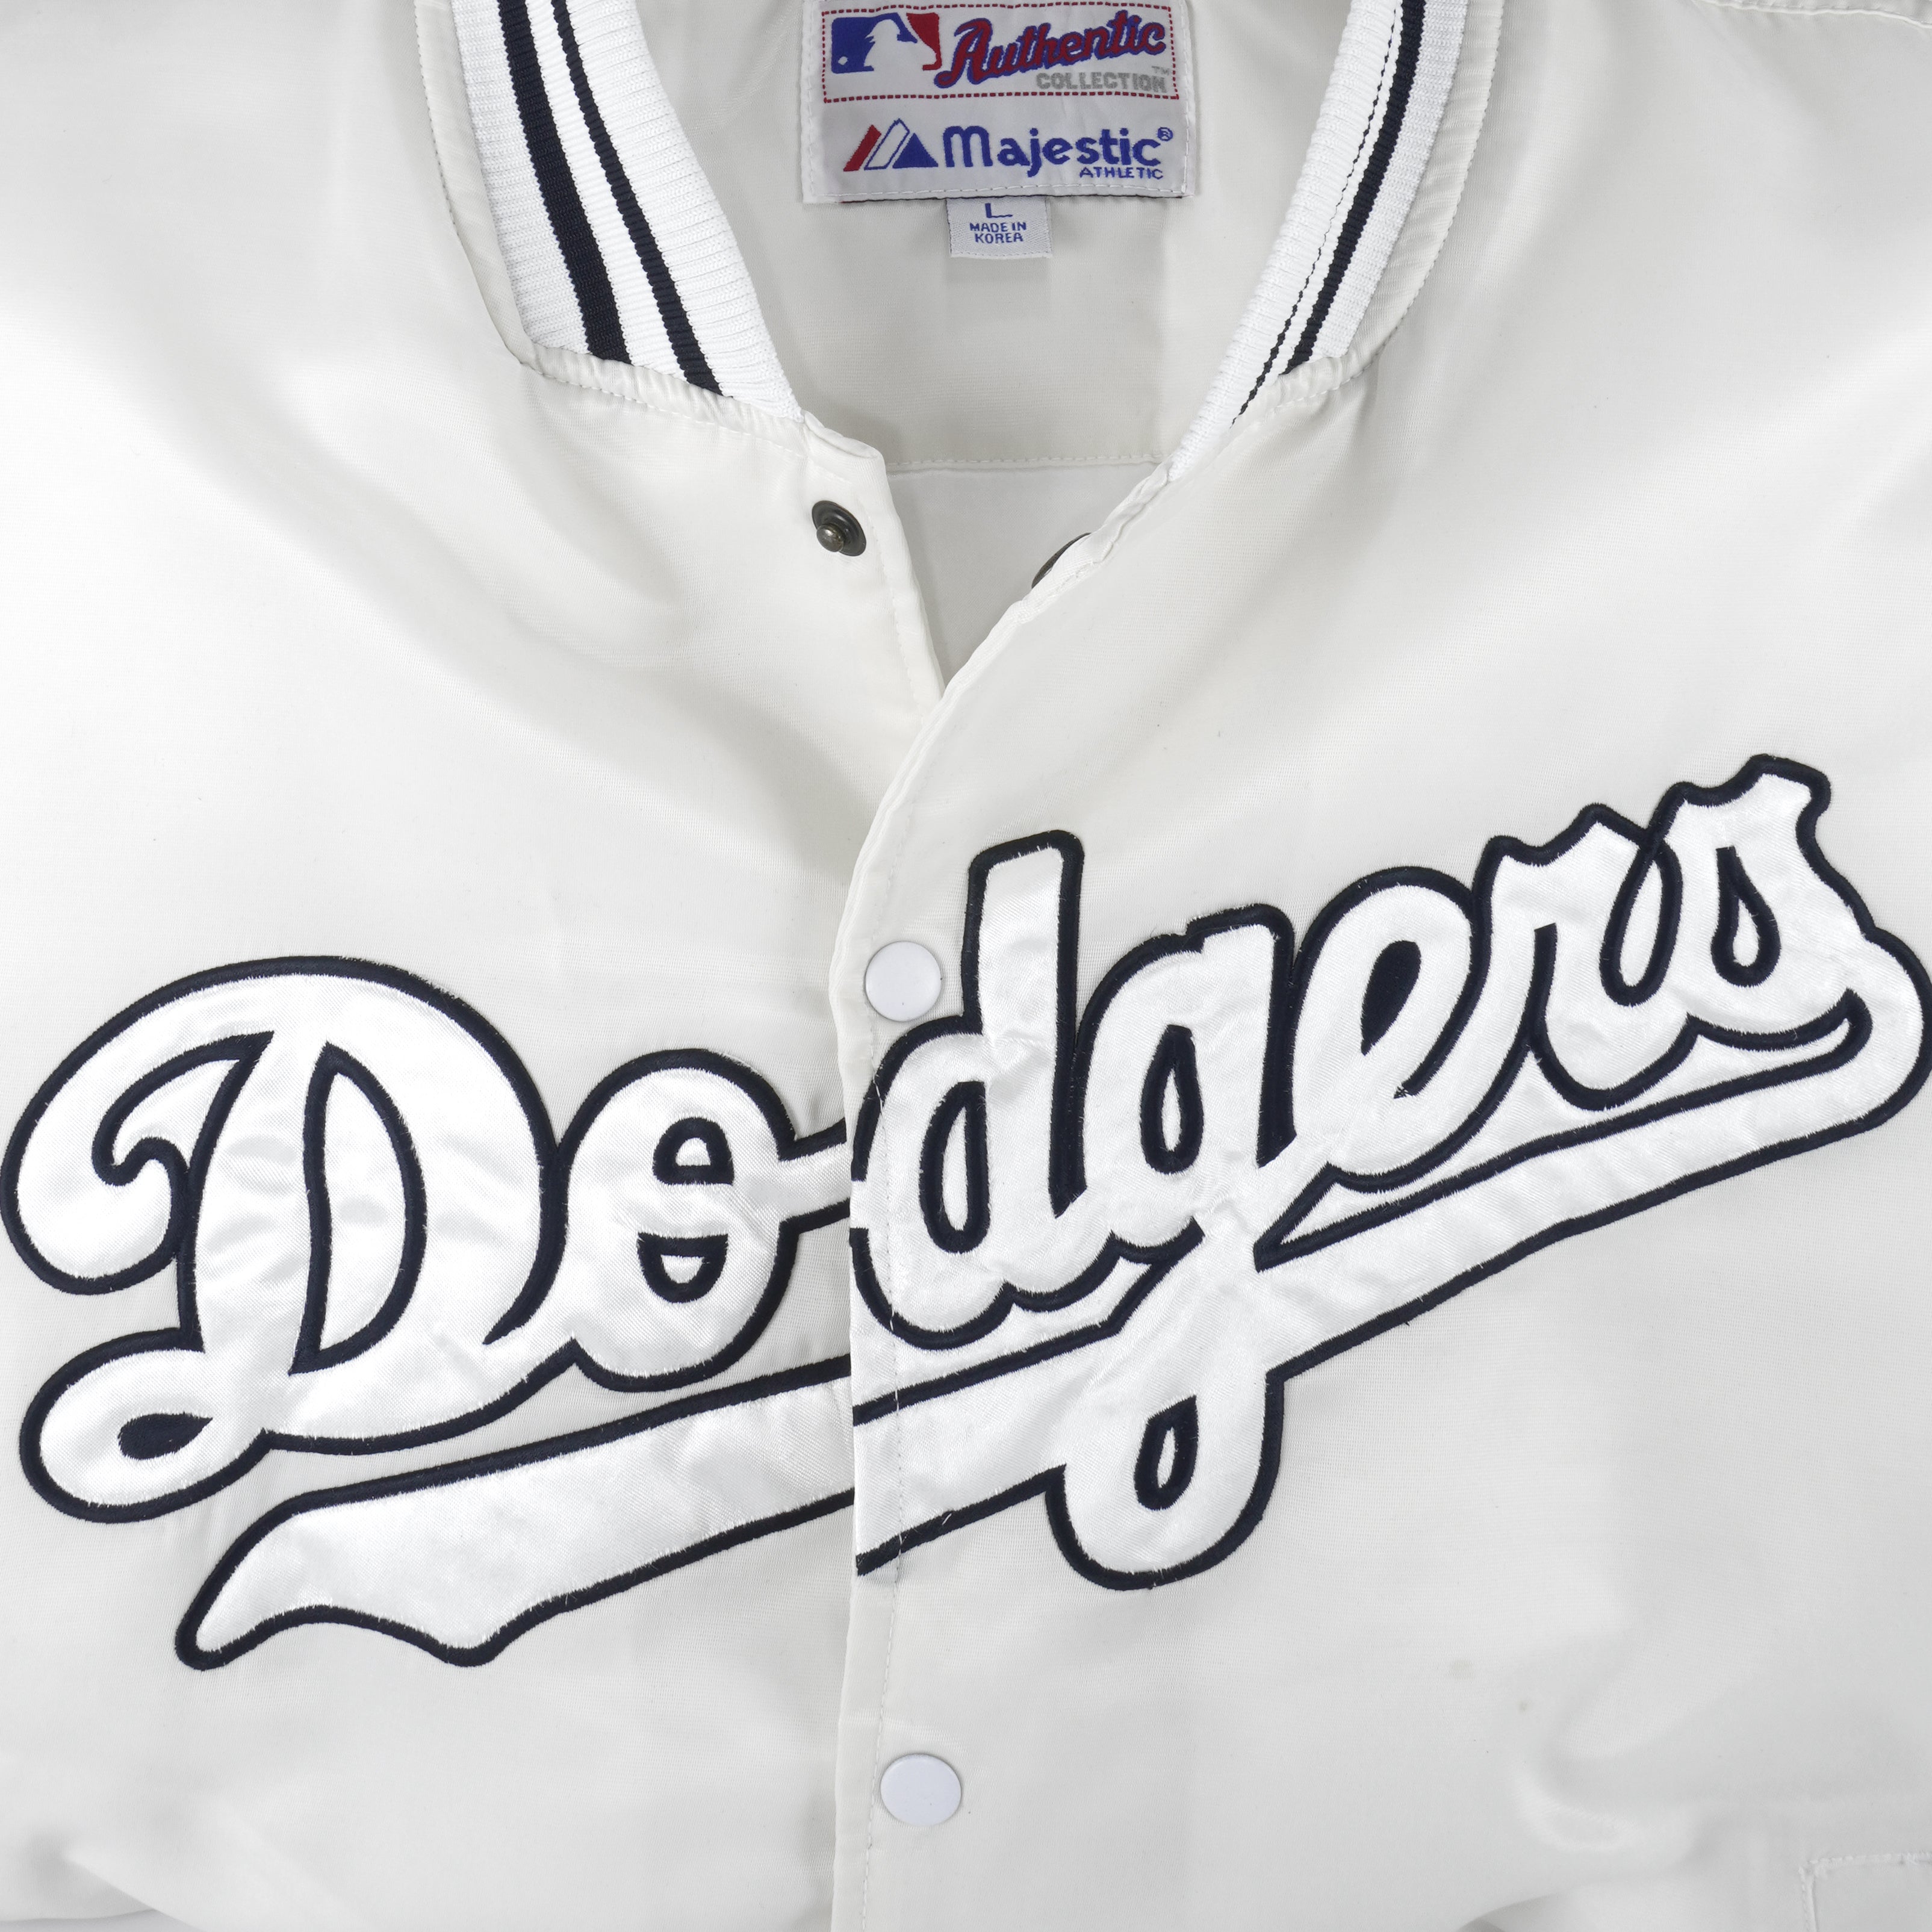 Dodgers Jacket Majestic 